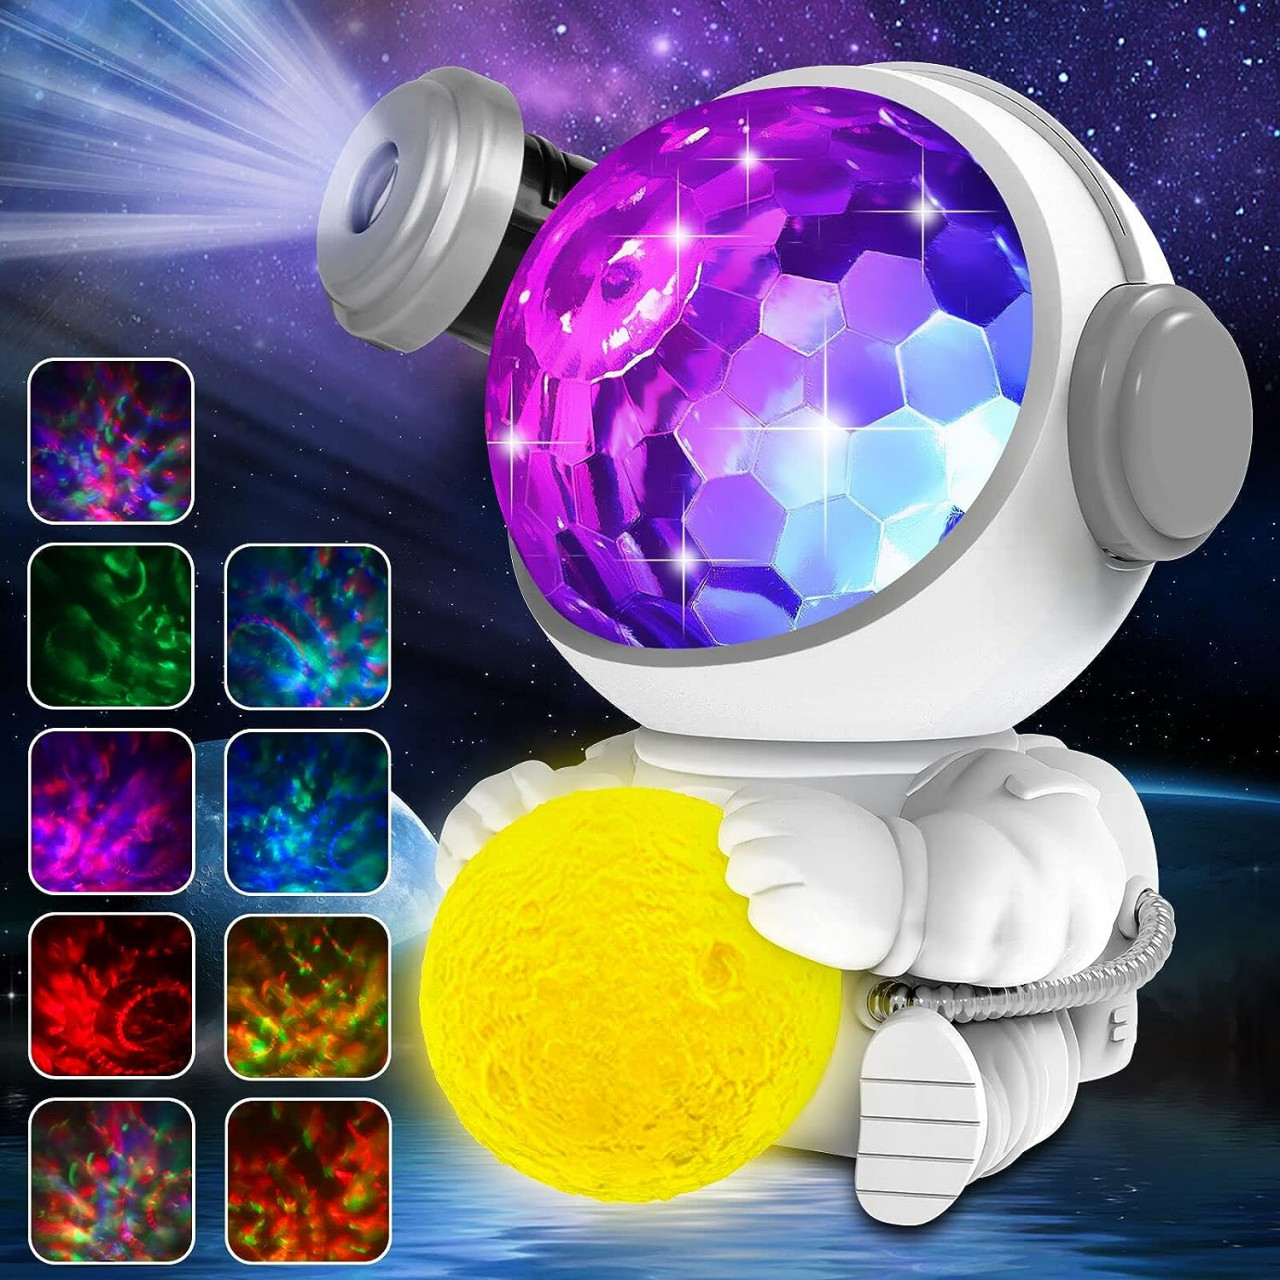 Proiector cer instelat cu lumina de noapte pentru copii Astronaut Star Galaxy M&LD, LED, alb, ABS, baterie, 14 x 14 x 20 cm chilipirul-zilei.ro/